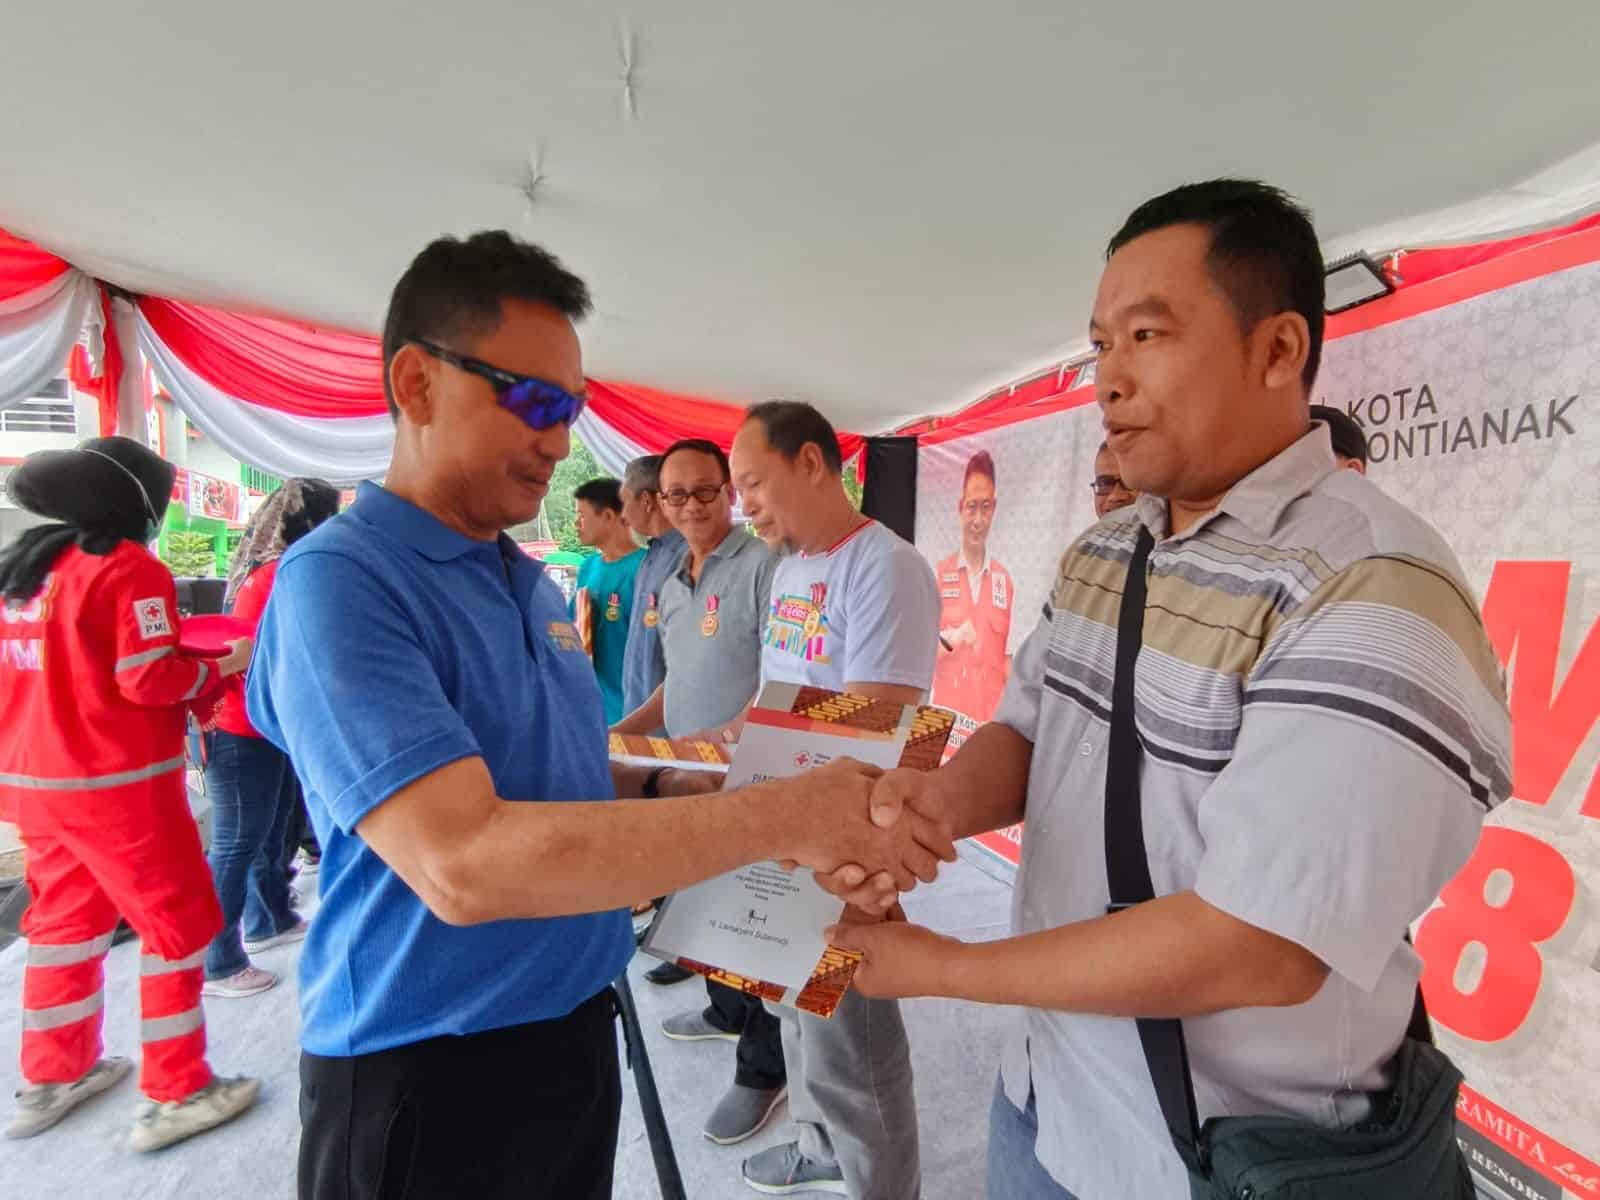 Ketua PMI Kota Pontianak, Edi Rusdi Kamtono menyerahkan piagam penghargaan kepada para pendonor darah. (Foto: Prokopim Pontianak)